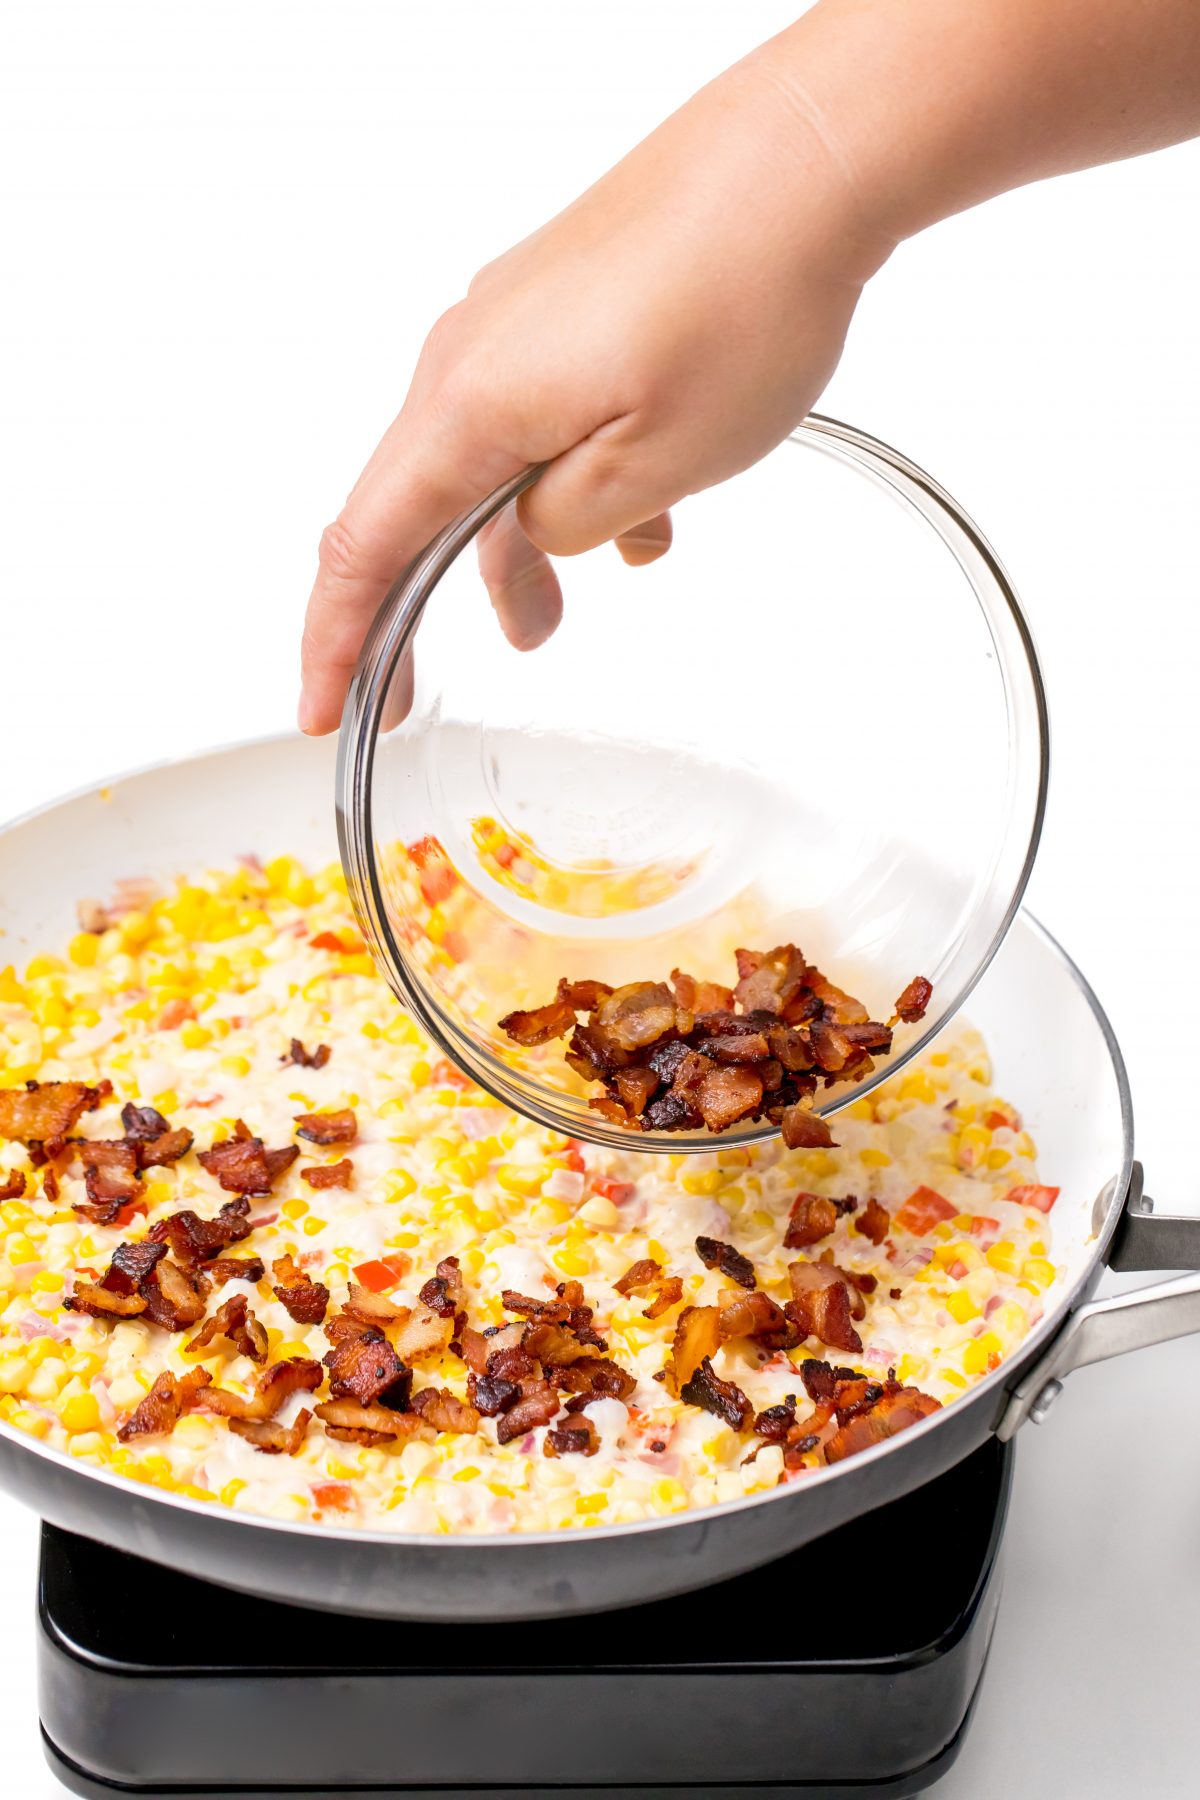 Reincorporate bacon crumbles into corn mixture